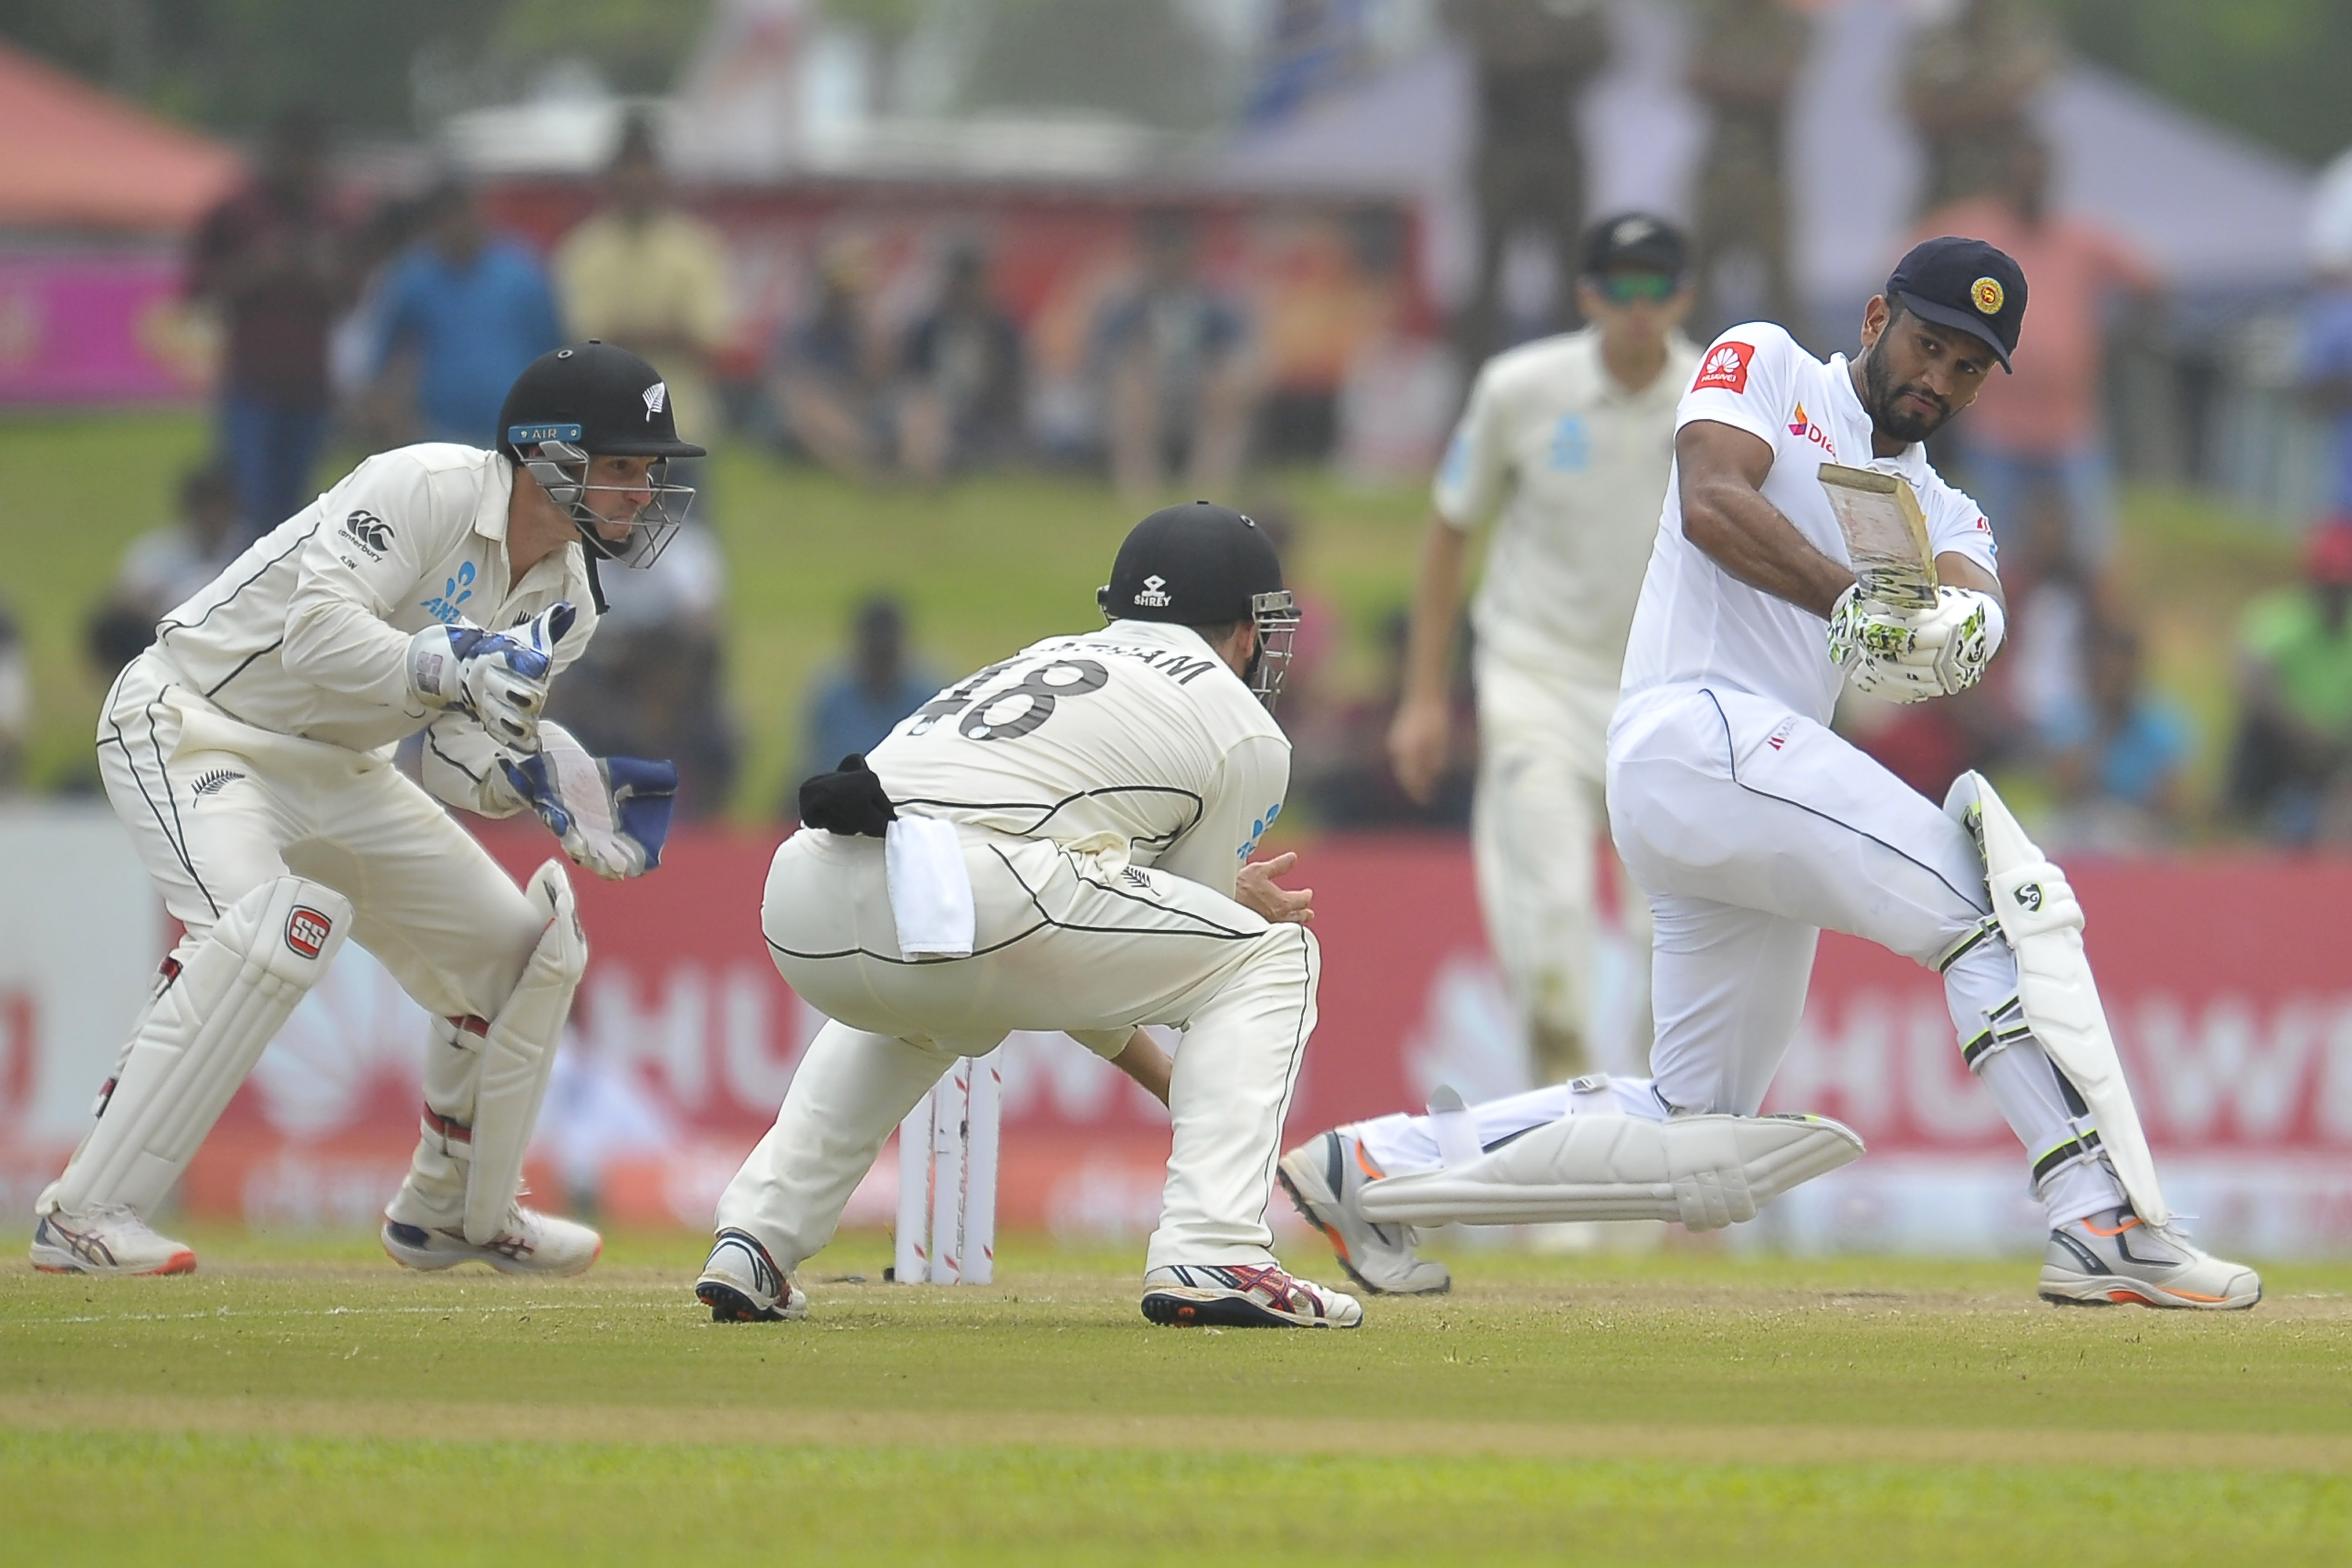 Sri Lanka sight victory 133/0 chasing 268